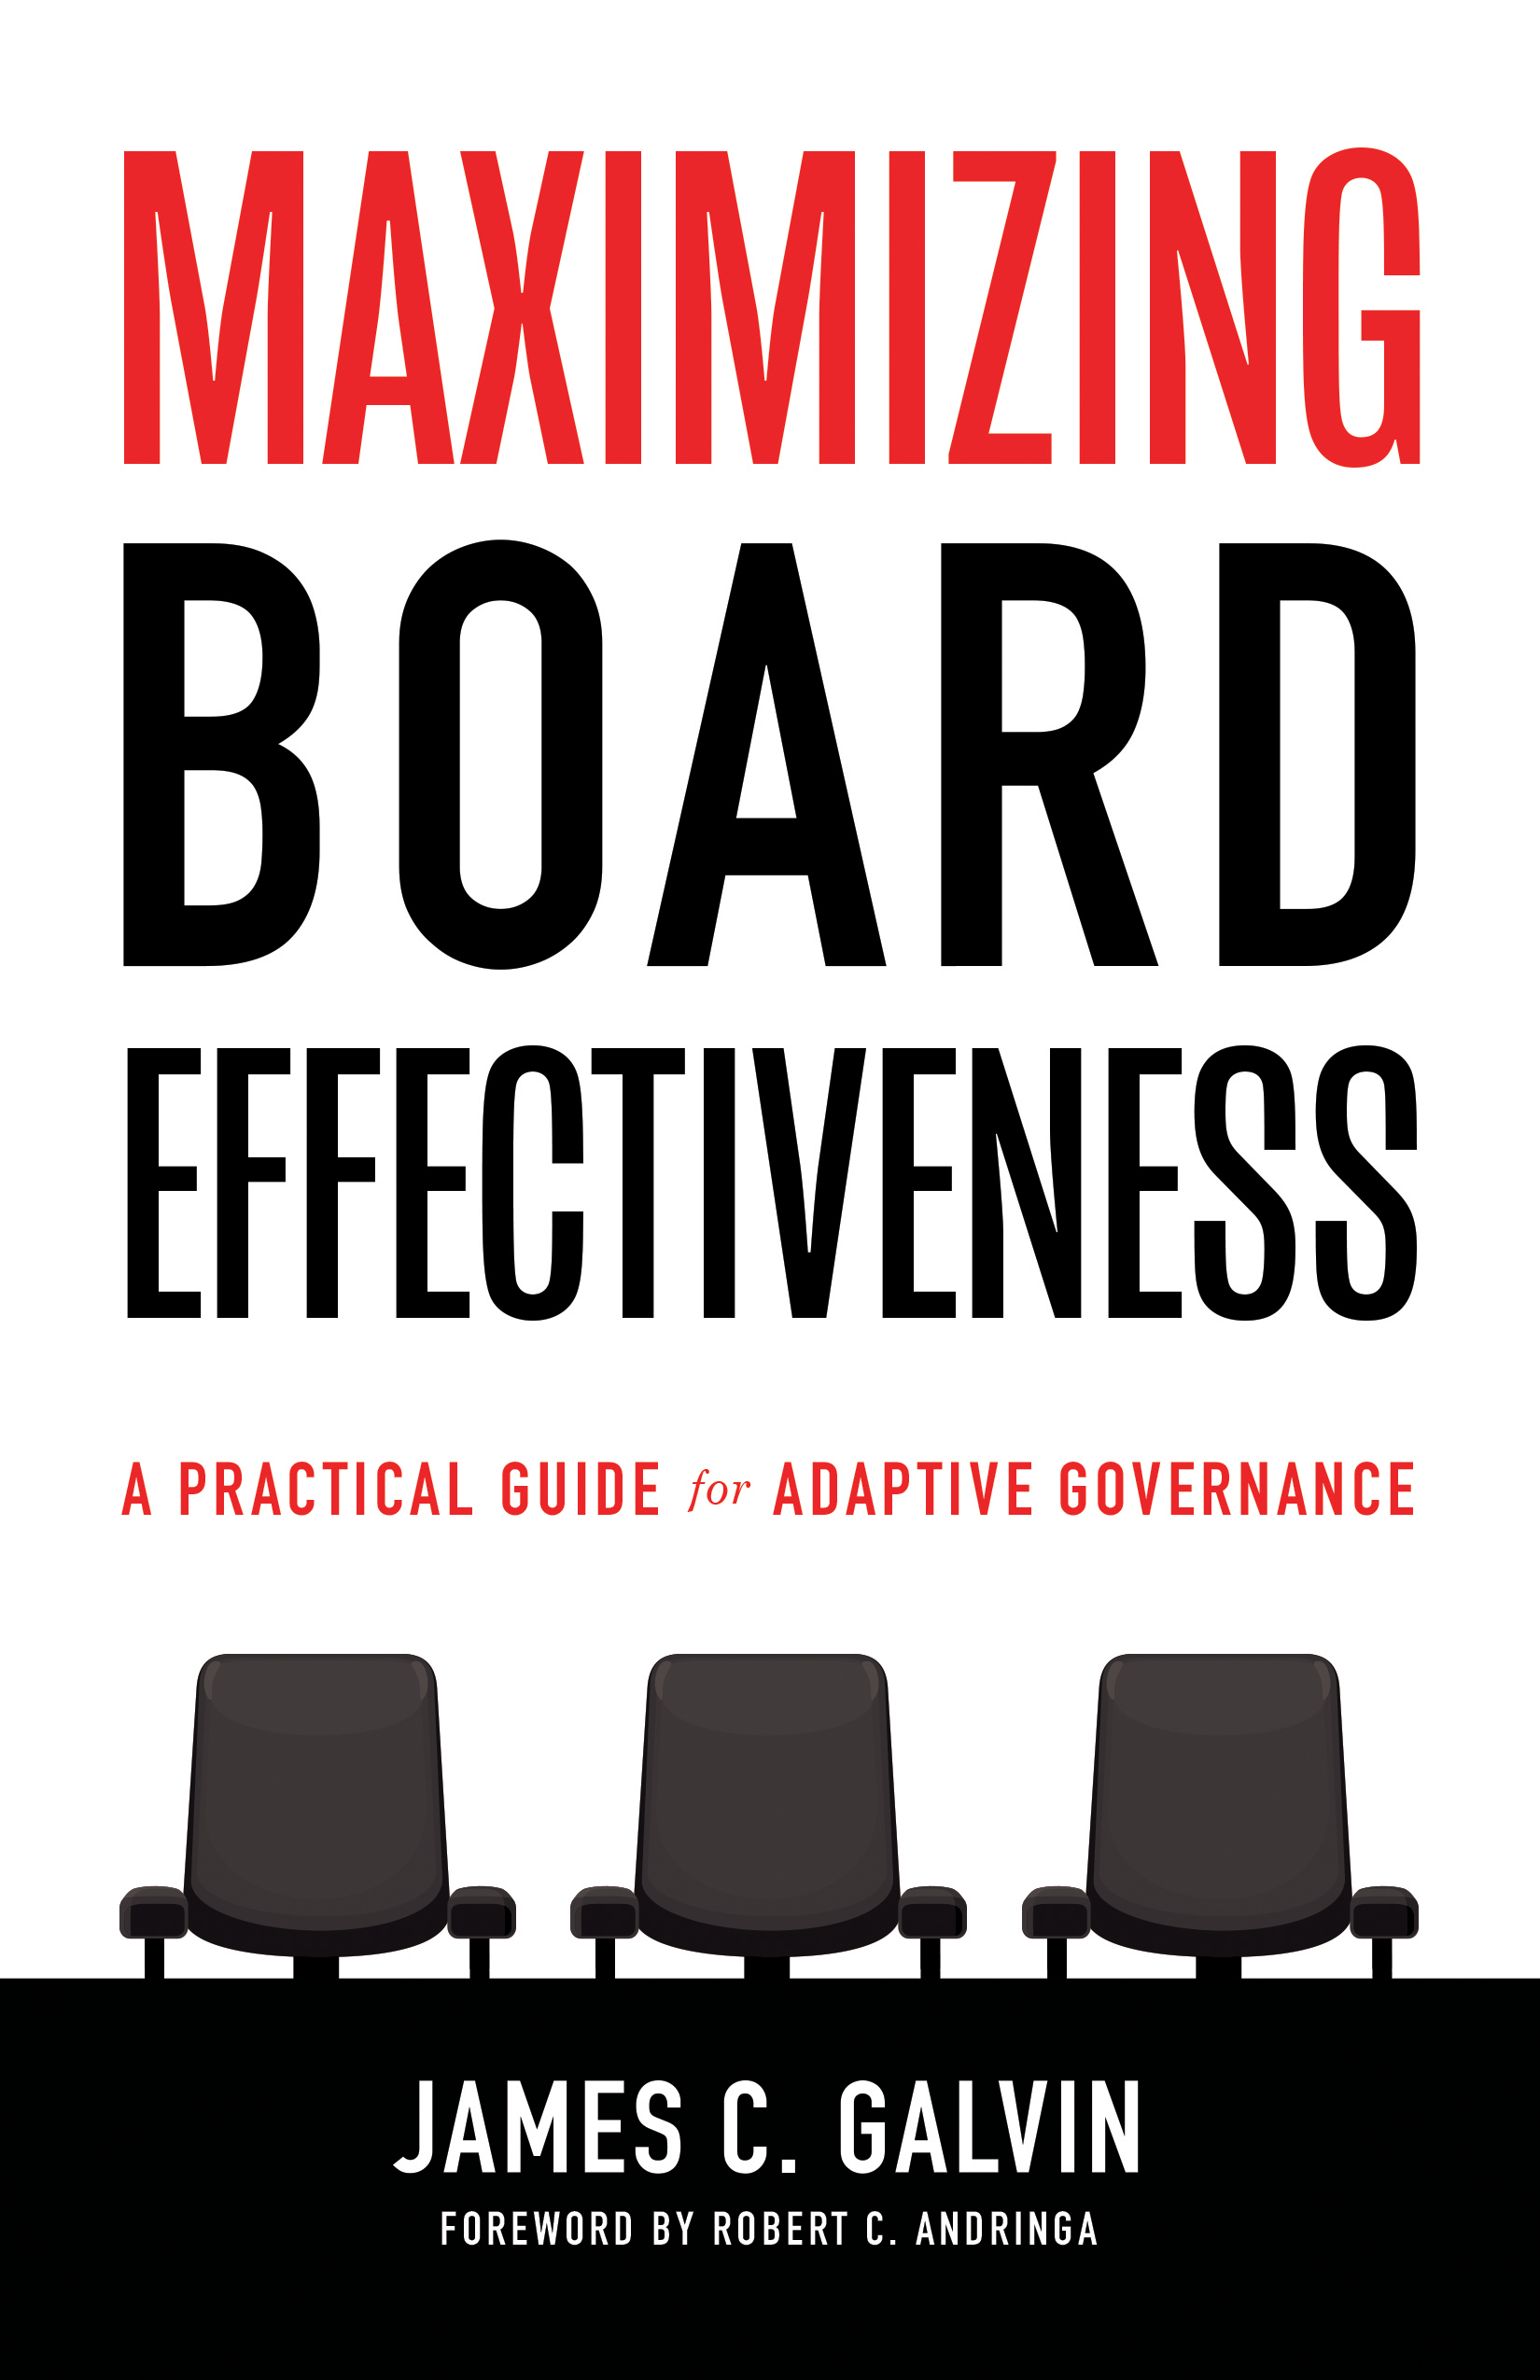 Maximizing Board Effectiveness